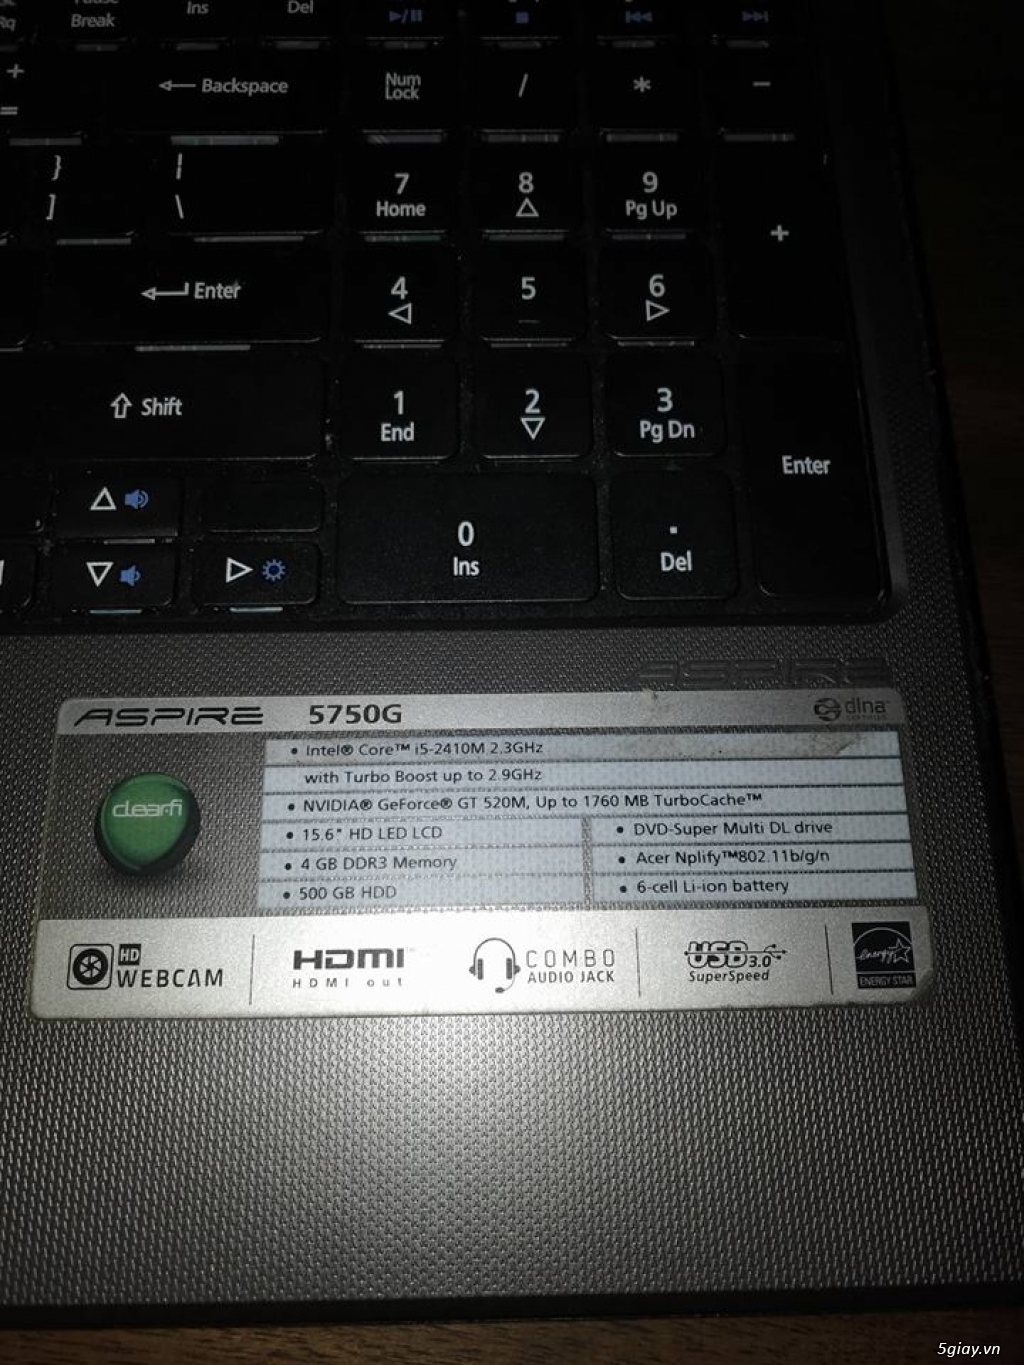 Thanh lý laptop Acer Aspire 5750G - 2